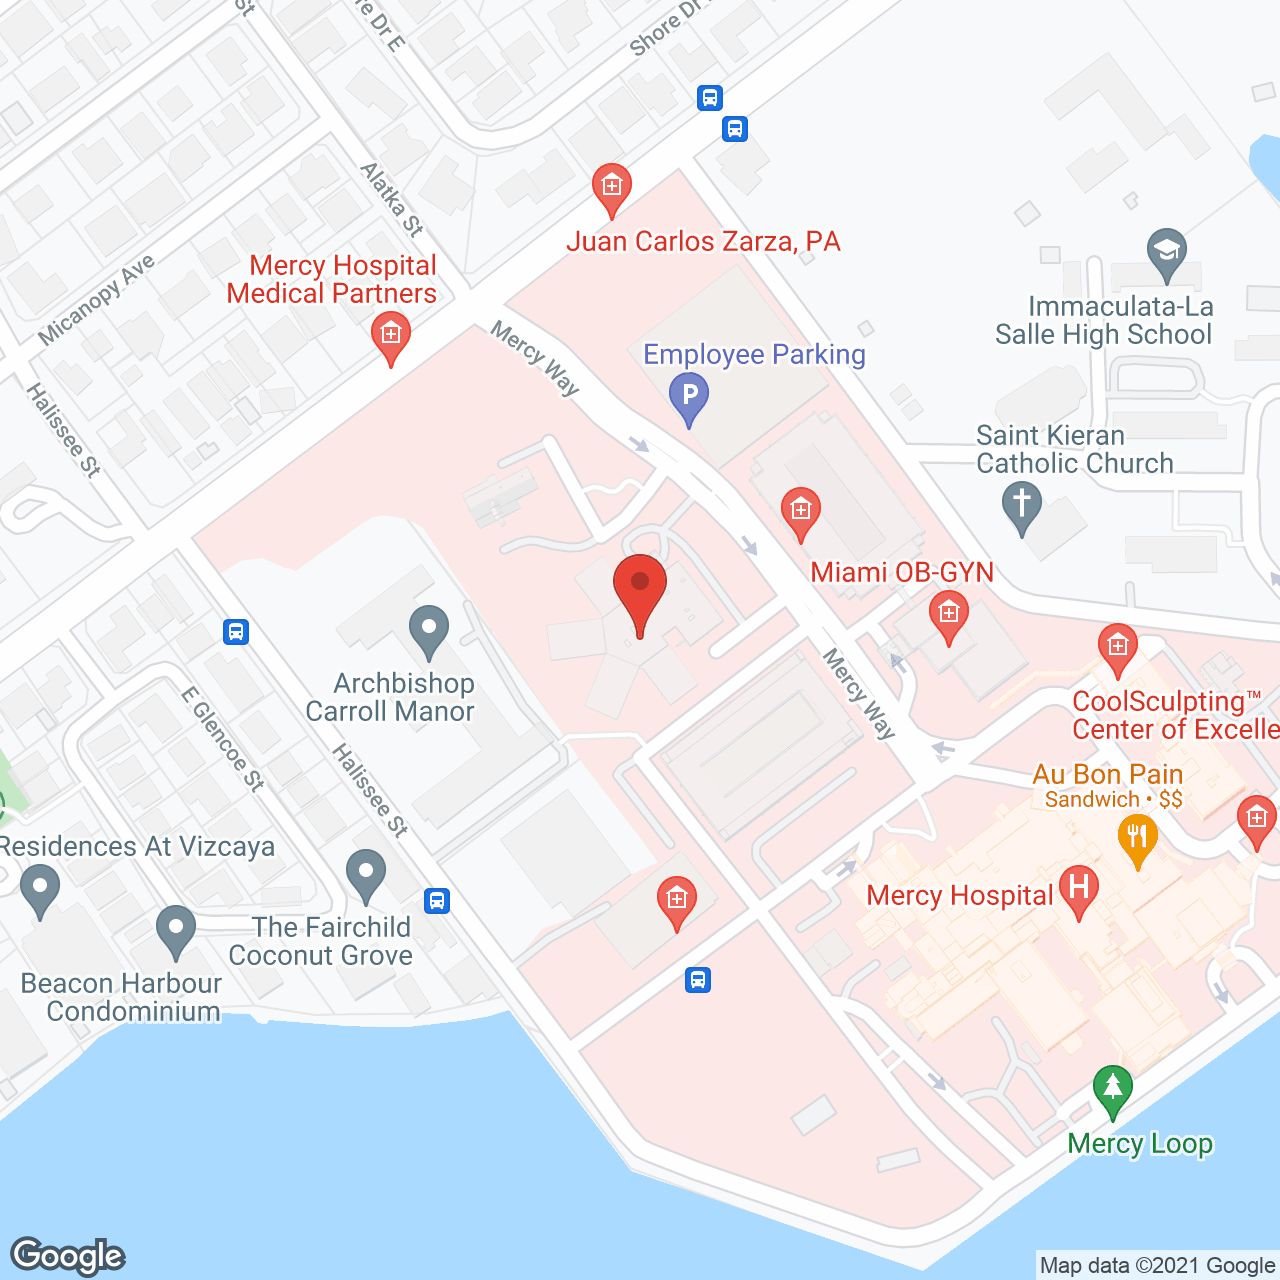 Nursing Center At Mercy in google map